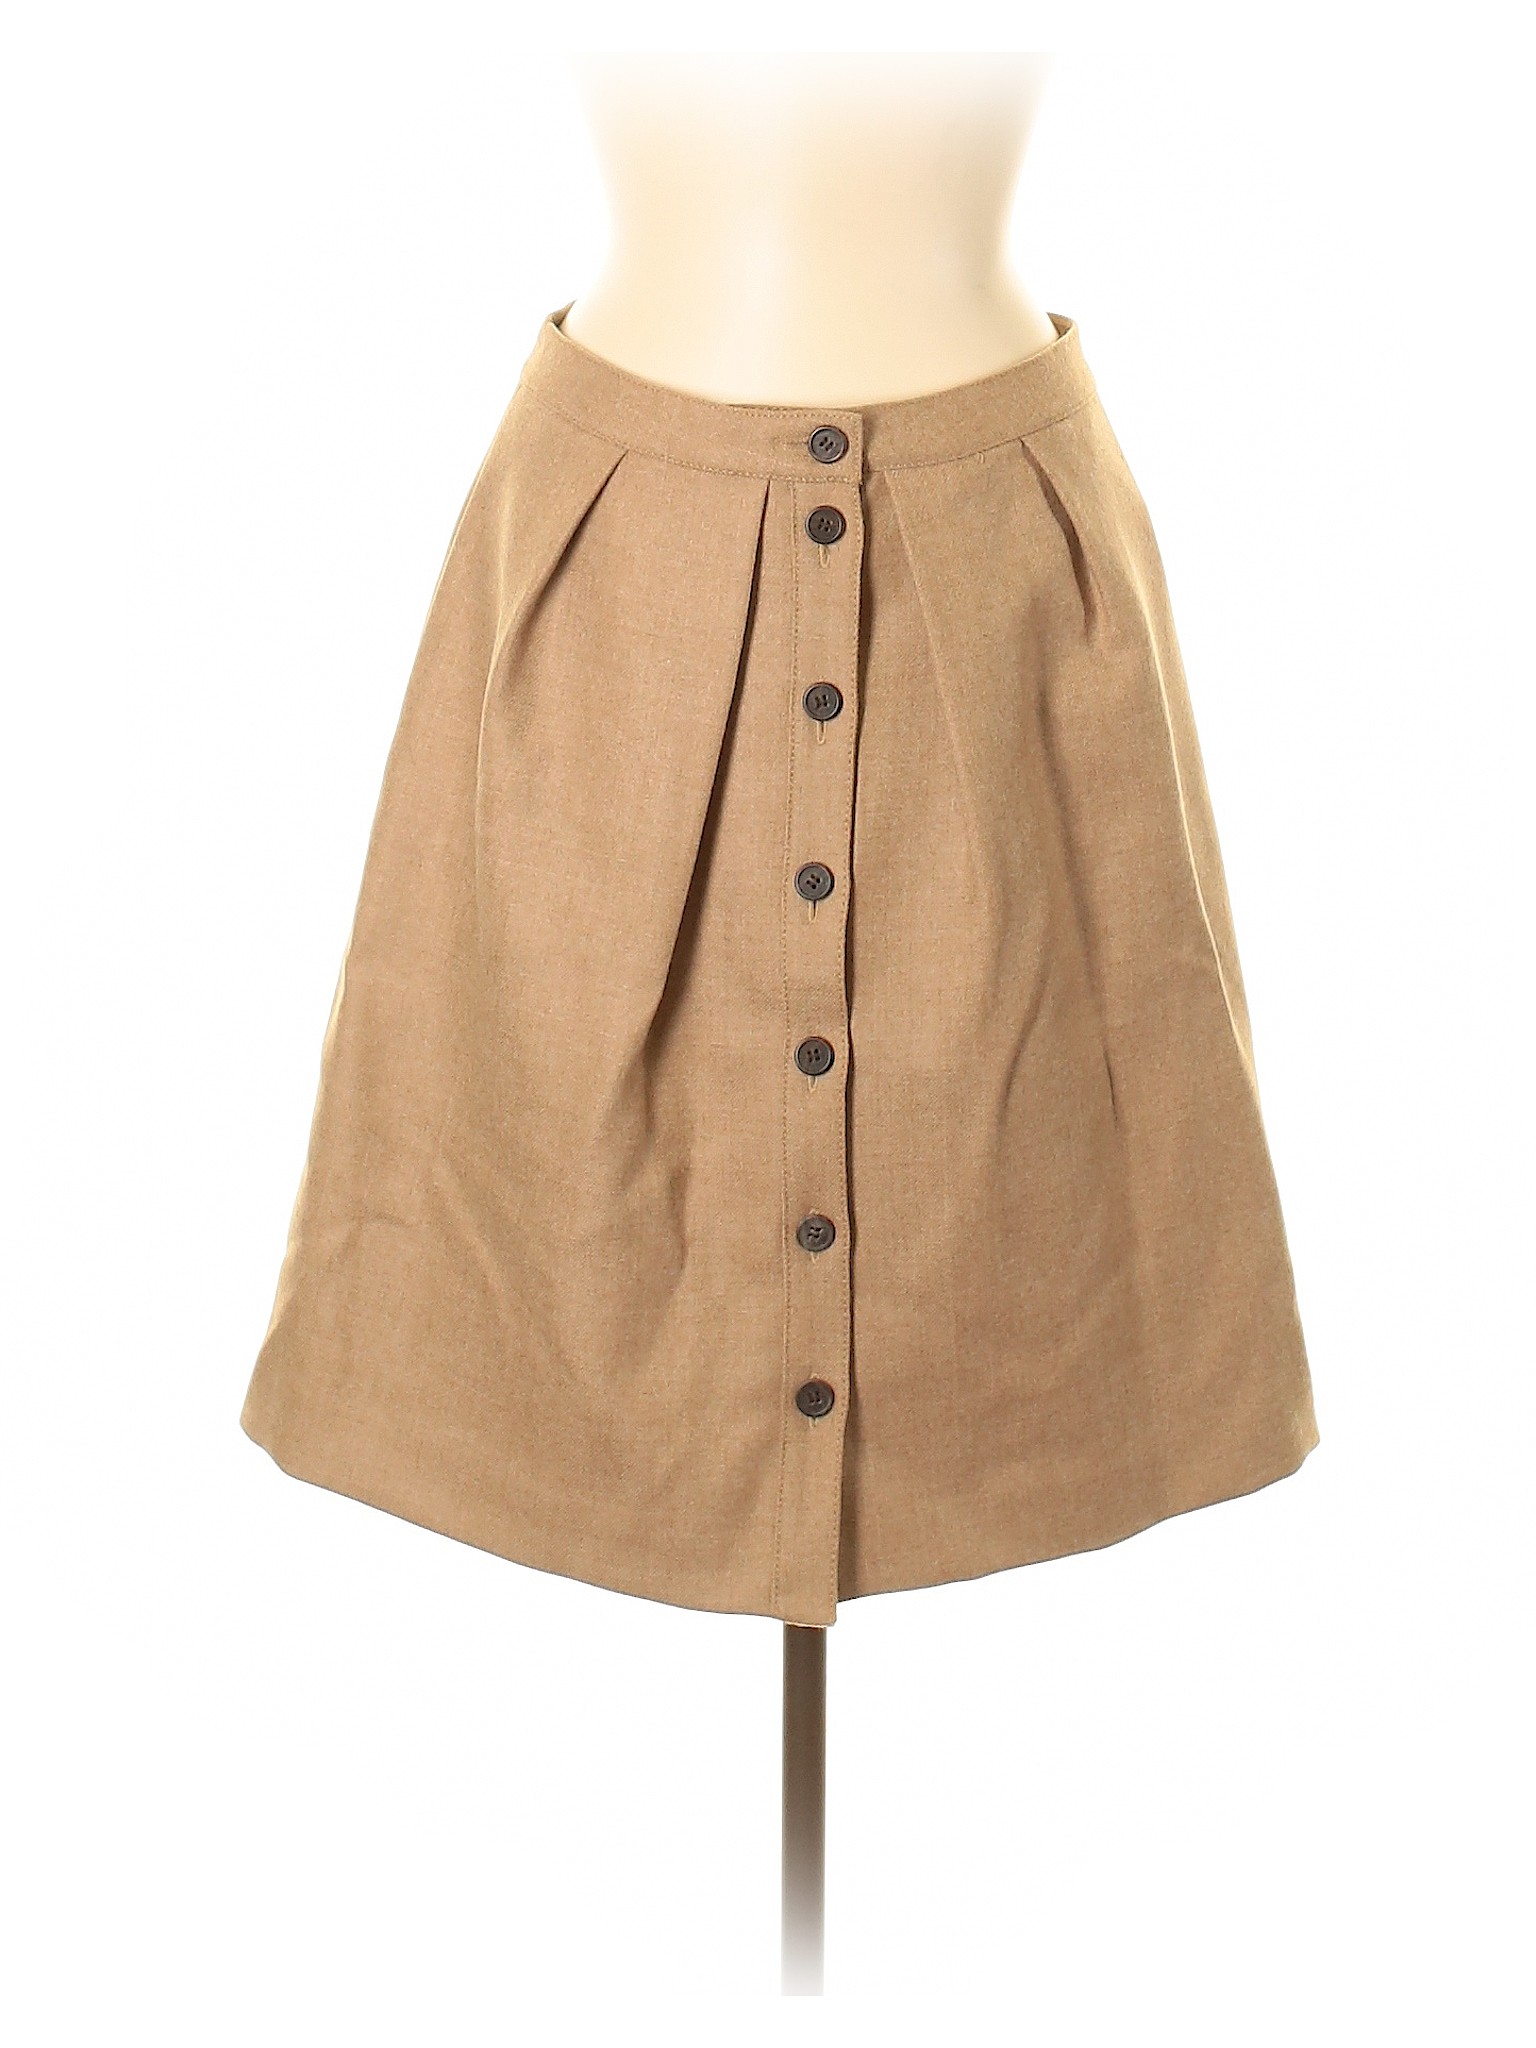 J.Crew 100% Wool Solid Tan Wool Skirt Size 6 - 78% off | thredUP